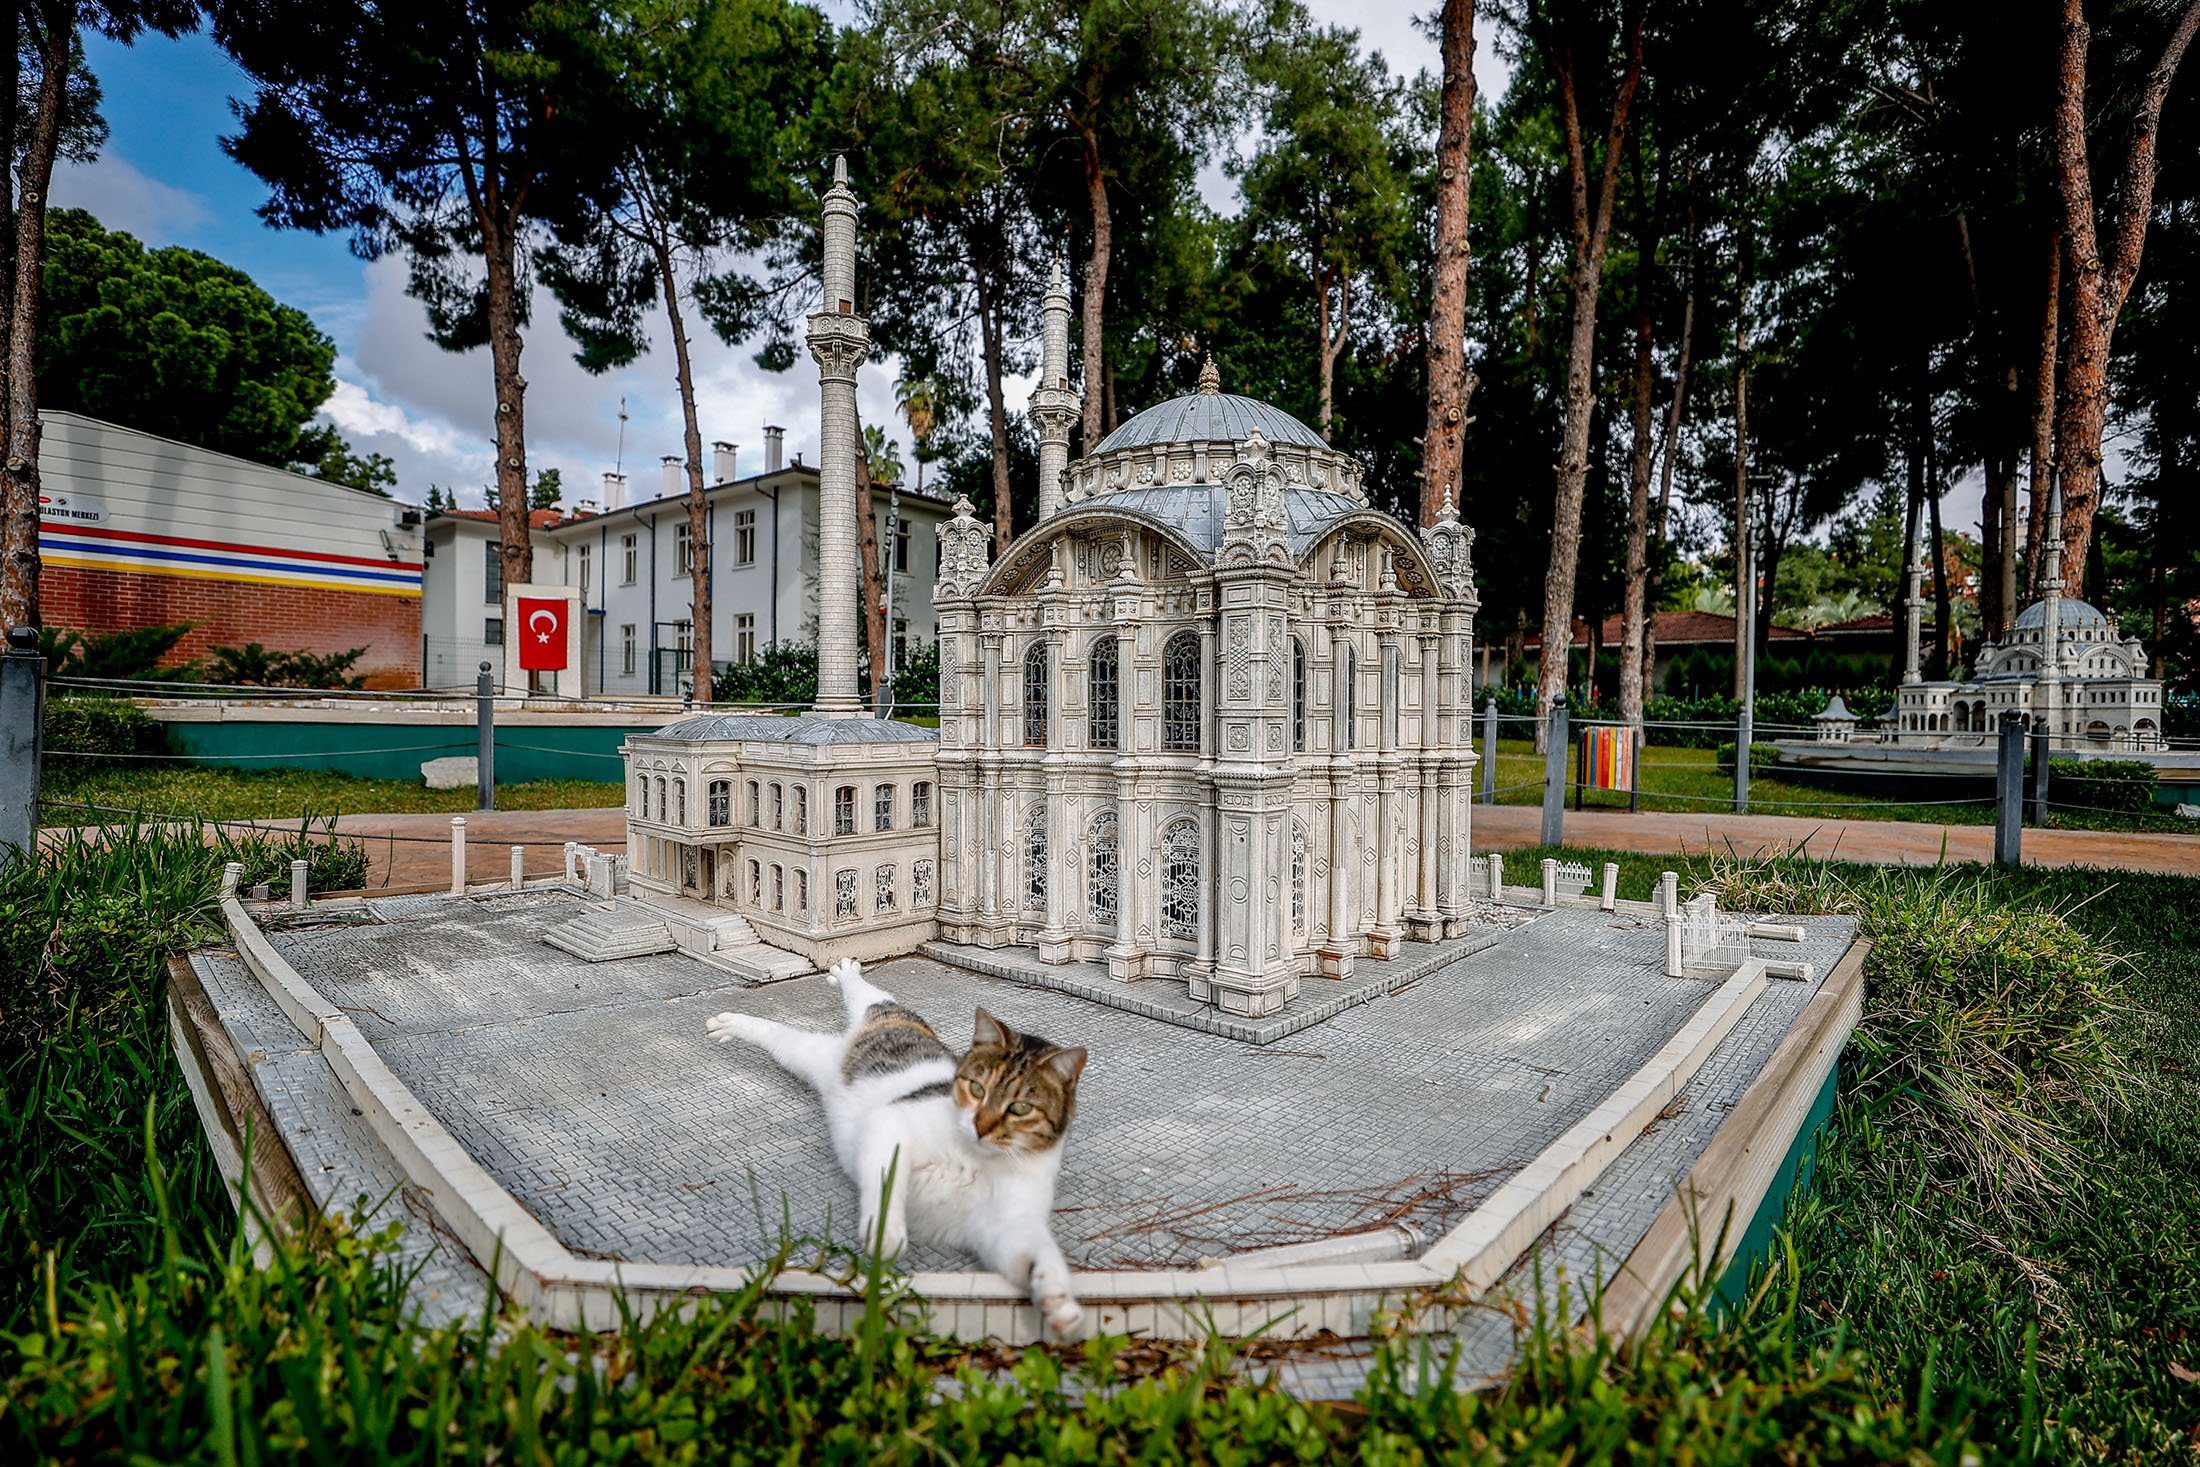 Felines take over miniature park in Antalya